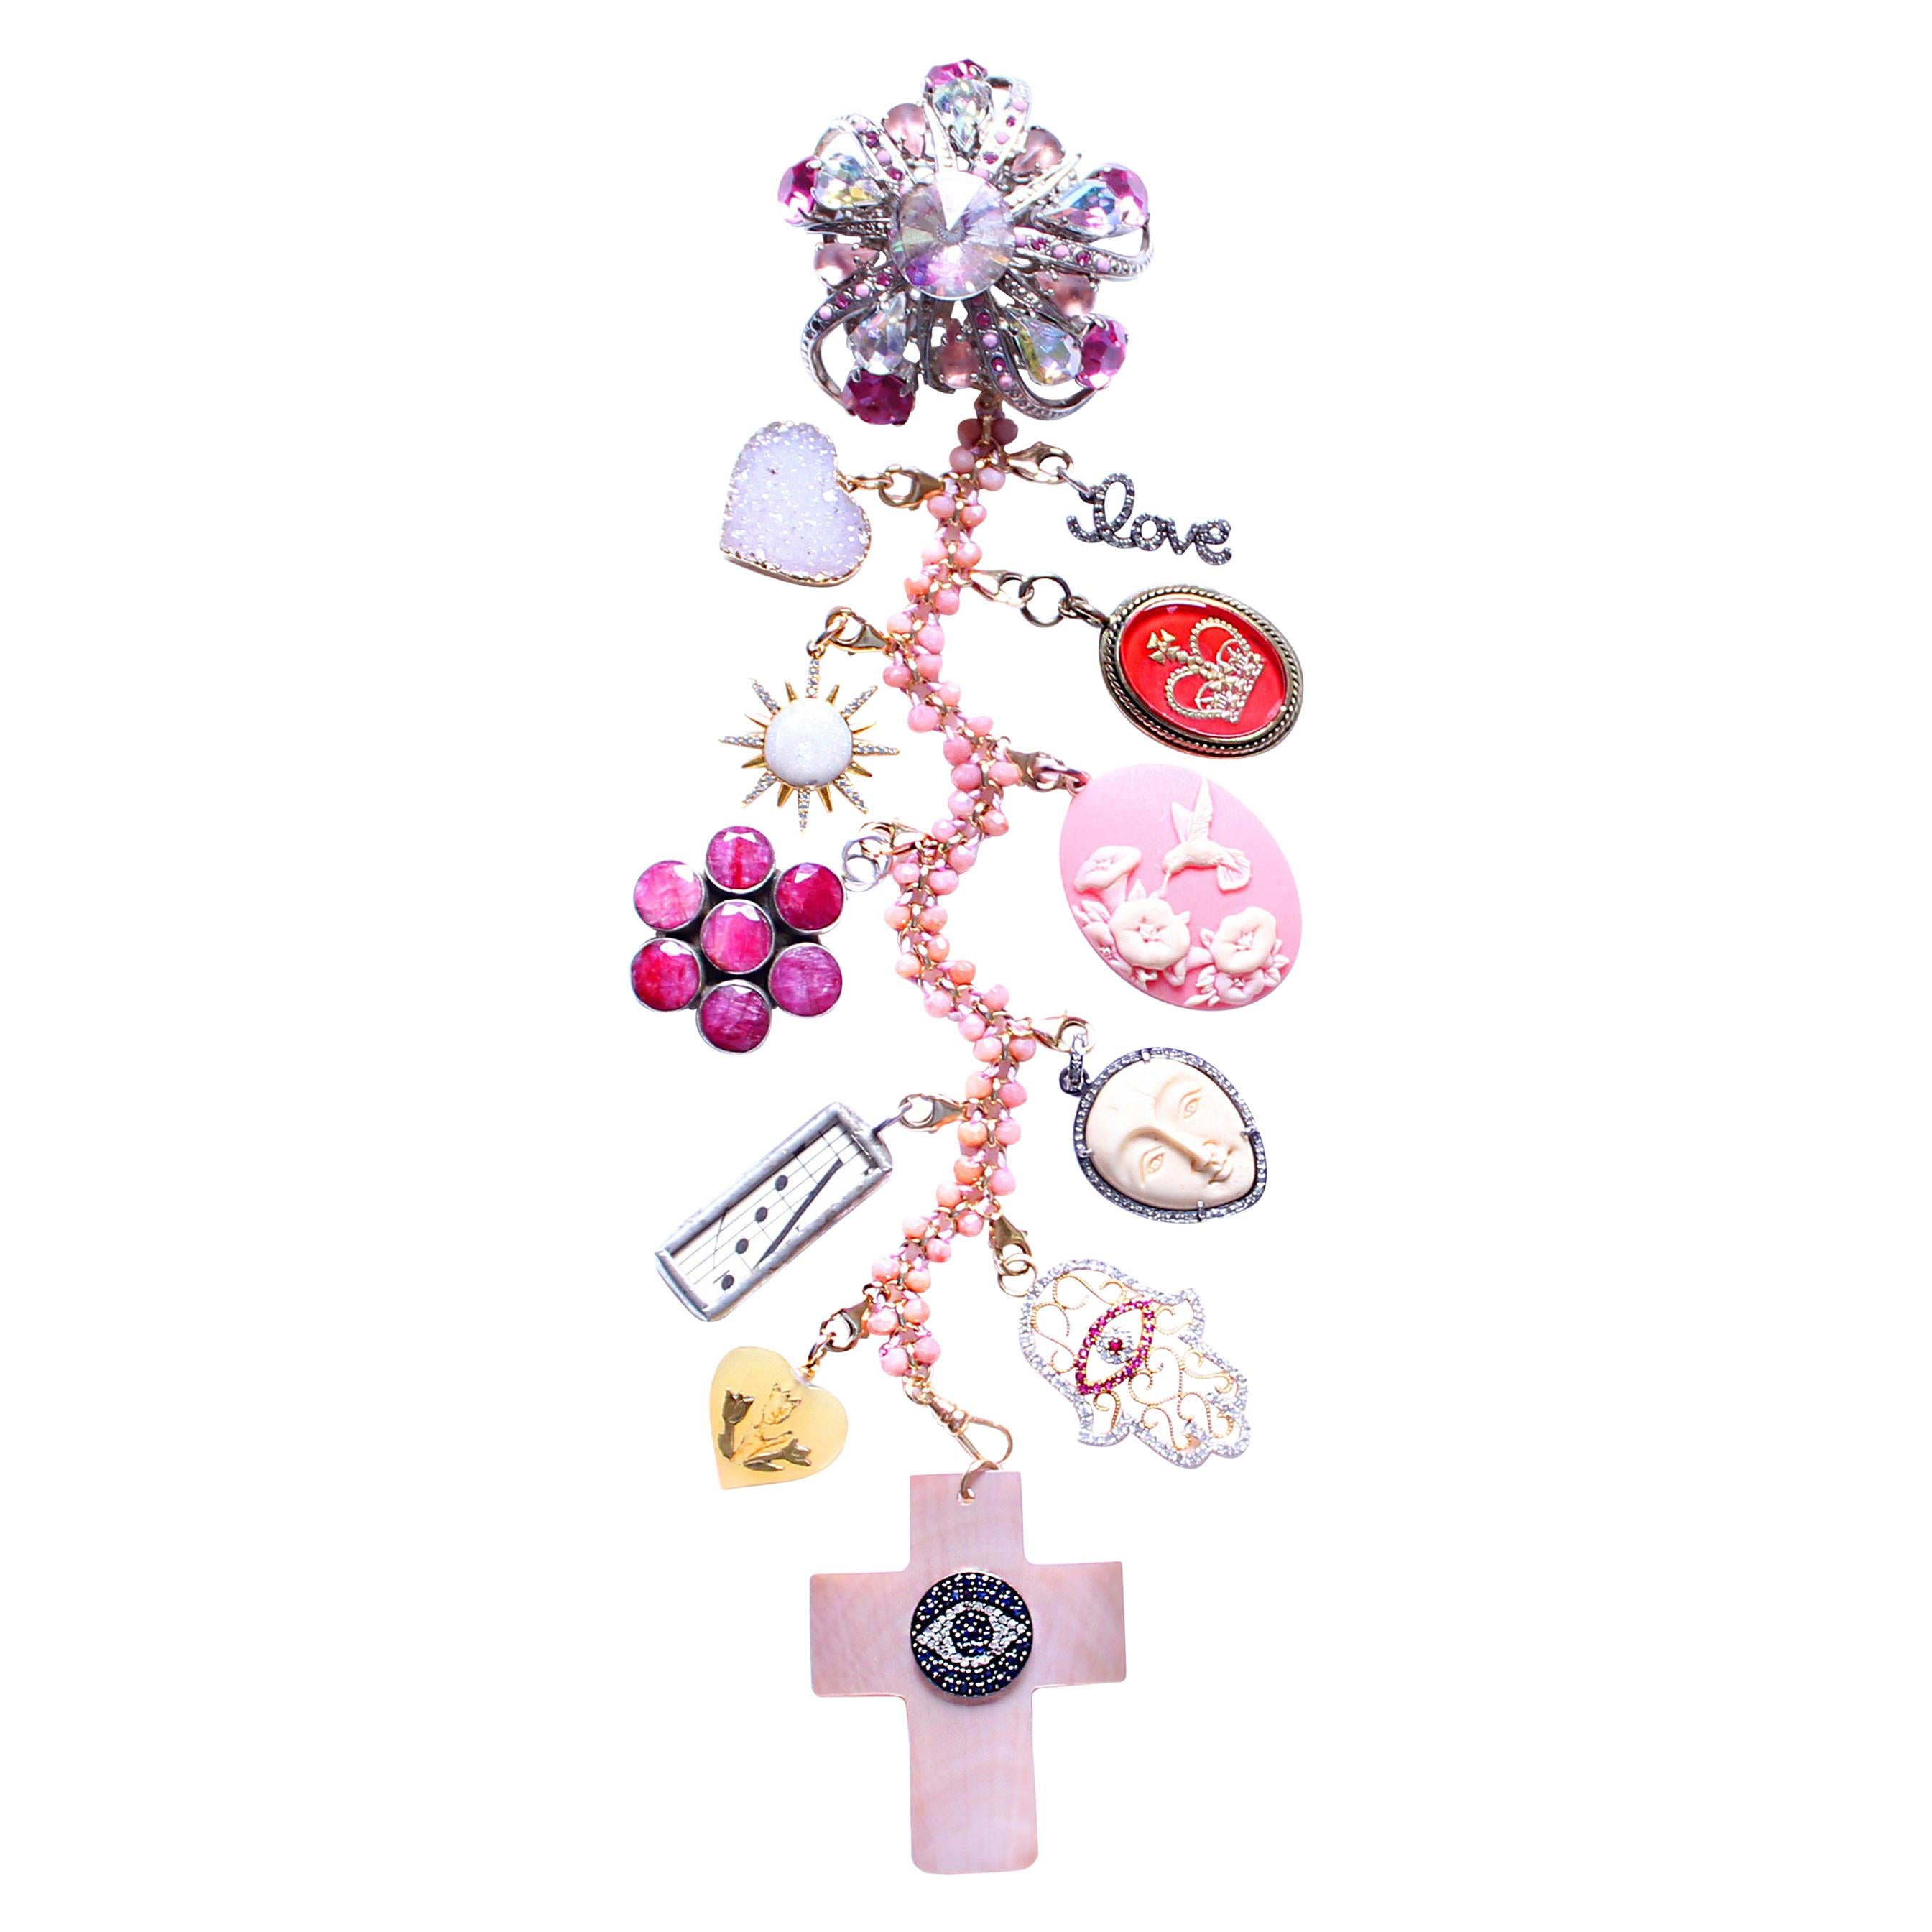 Clarissa Bronfman "Pink Martini" Symbol Tree Necklace